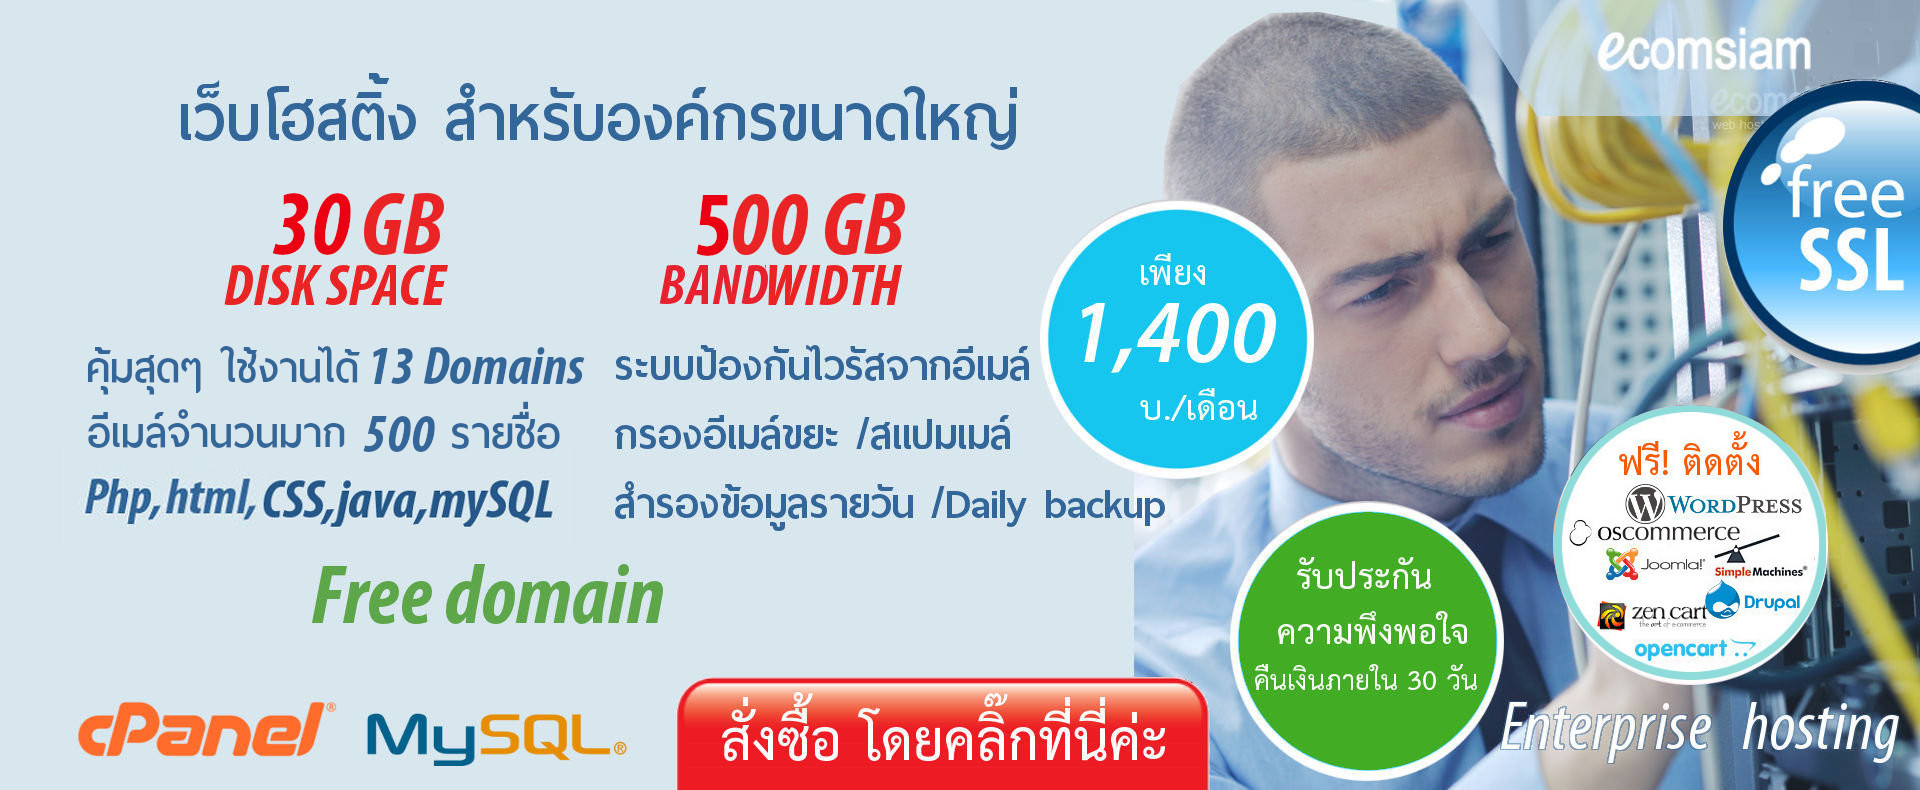 thailandwebhost web hosting thailand แนะนำ Enterprise web hosting thailand เว็บโฮสต์ติ้งสำหรับองค์กรขนาดใหญ่ สำหรับใช้งานโดเมนจำนวนมาก ราคาเพียง 1,400 บ./เดือน เว็บโฮสติ้งไทย ฟรี โดเมน ฟรี SSL ฟรีติดตั้ง แนะนำเว็บโฮสติ้ง บริการลูกค้า  Support ดูแลดี โดย thailandwebhost.com - enterprise web hosting thailand free domain